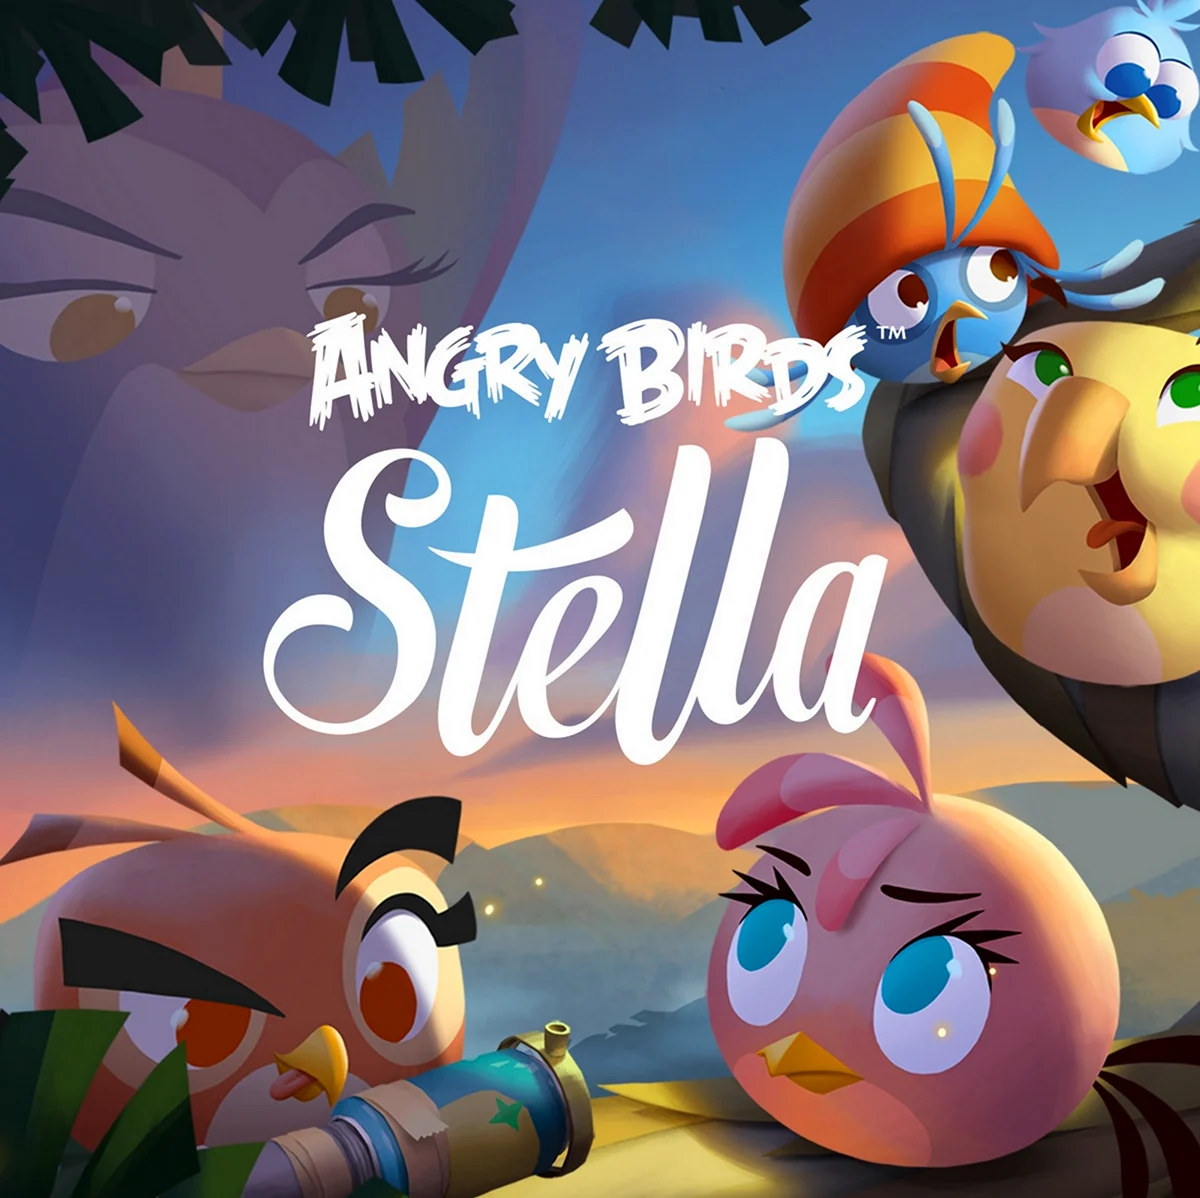 Angry Birds Stella Стелла. Картинка из мультфильма